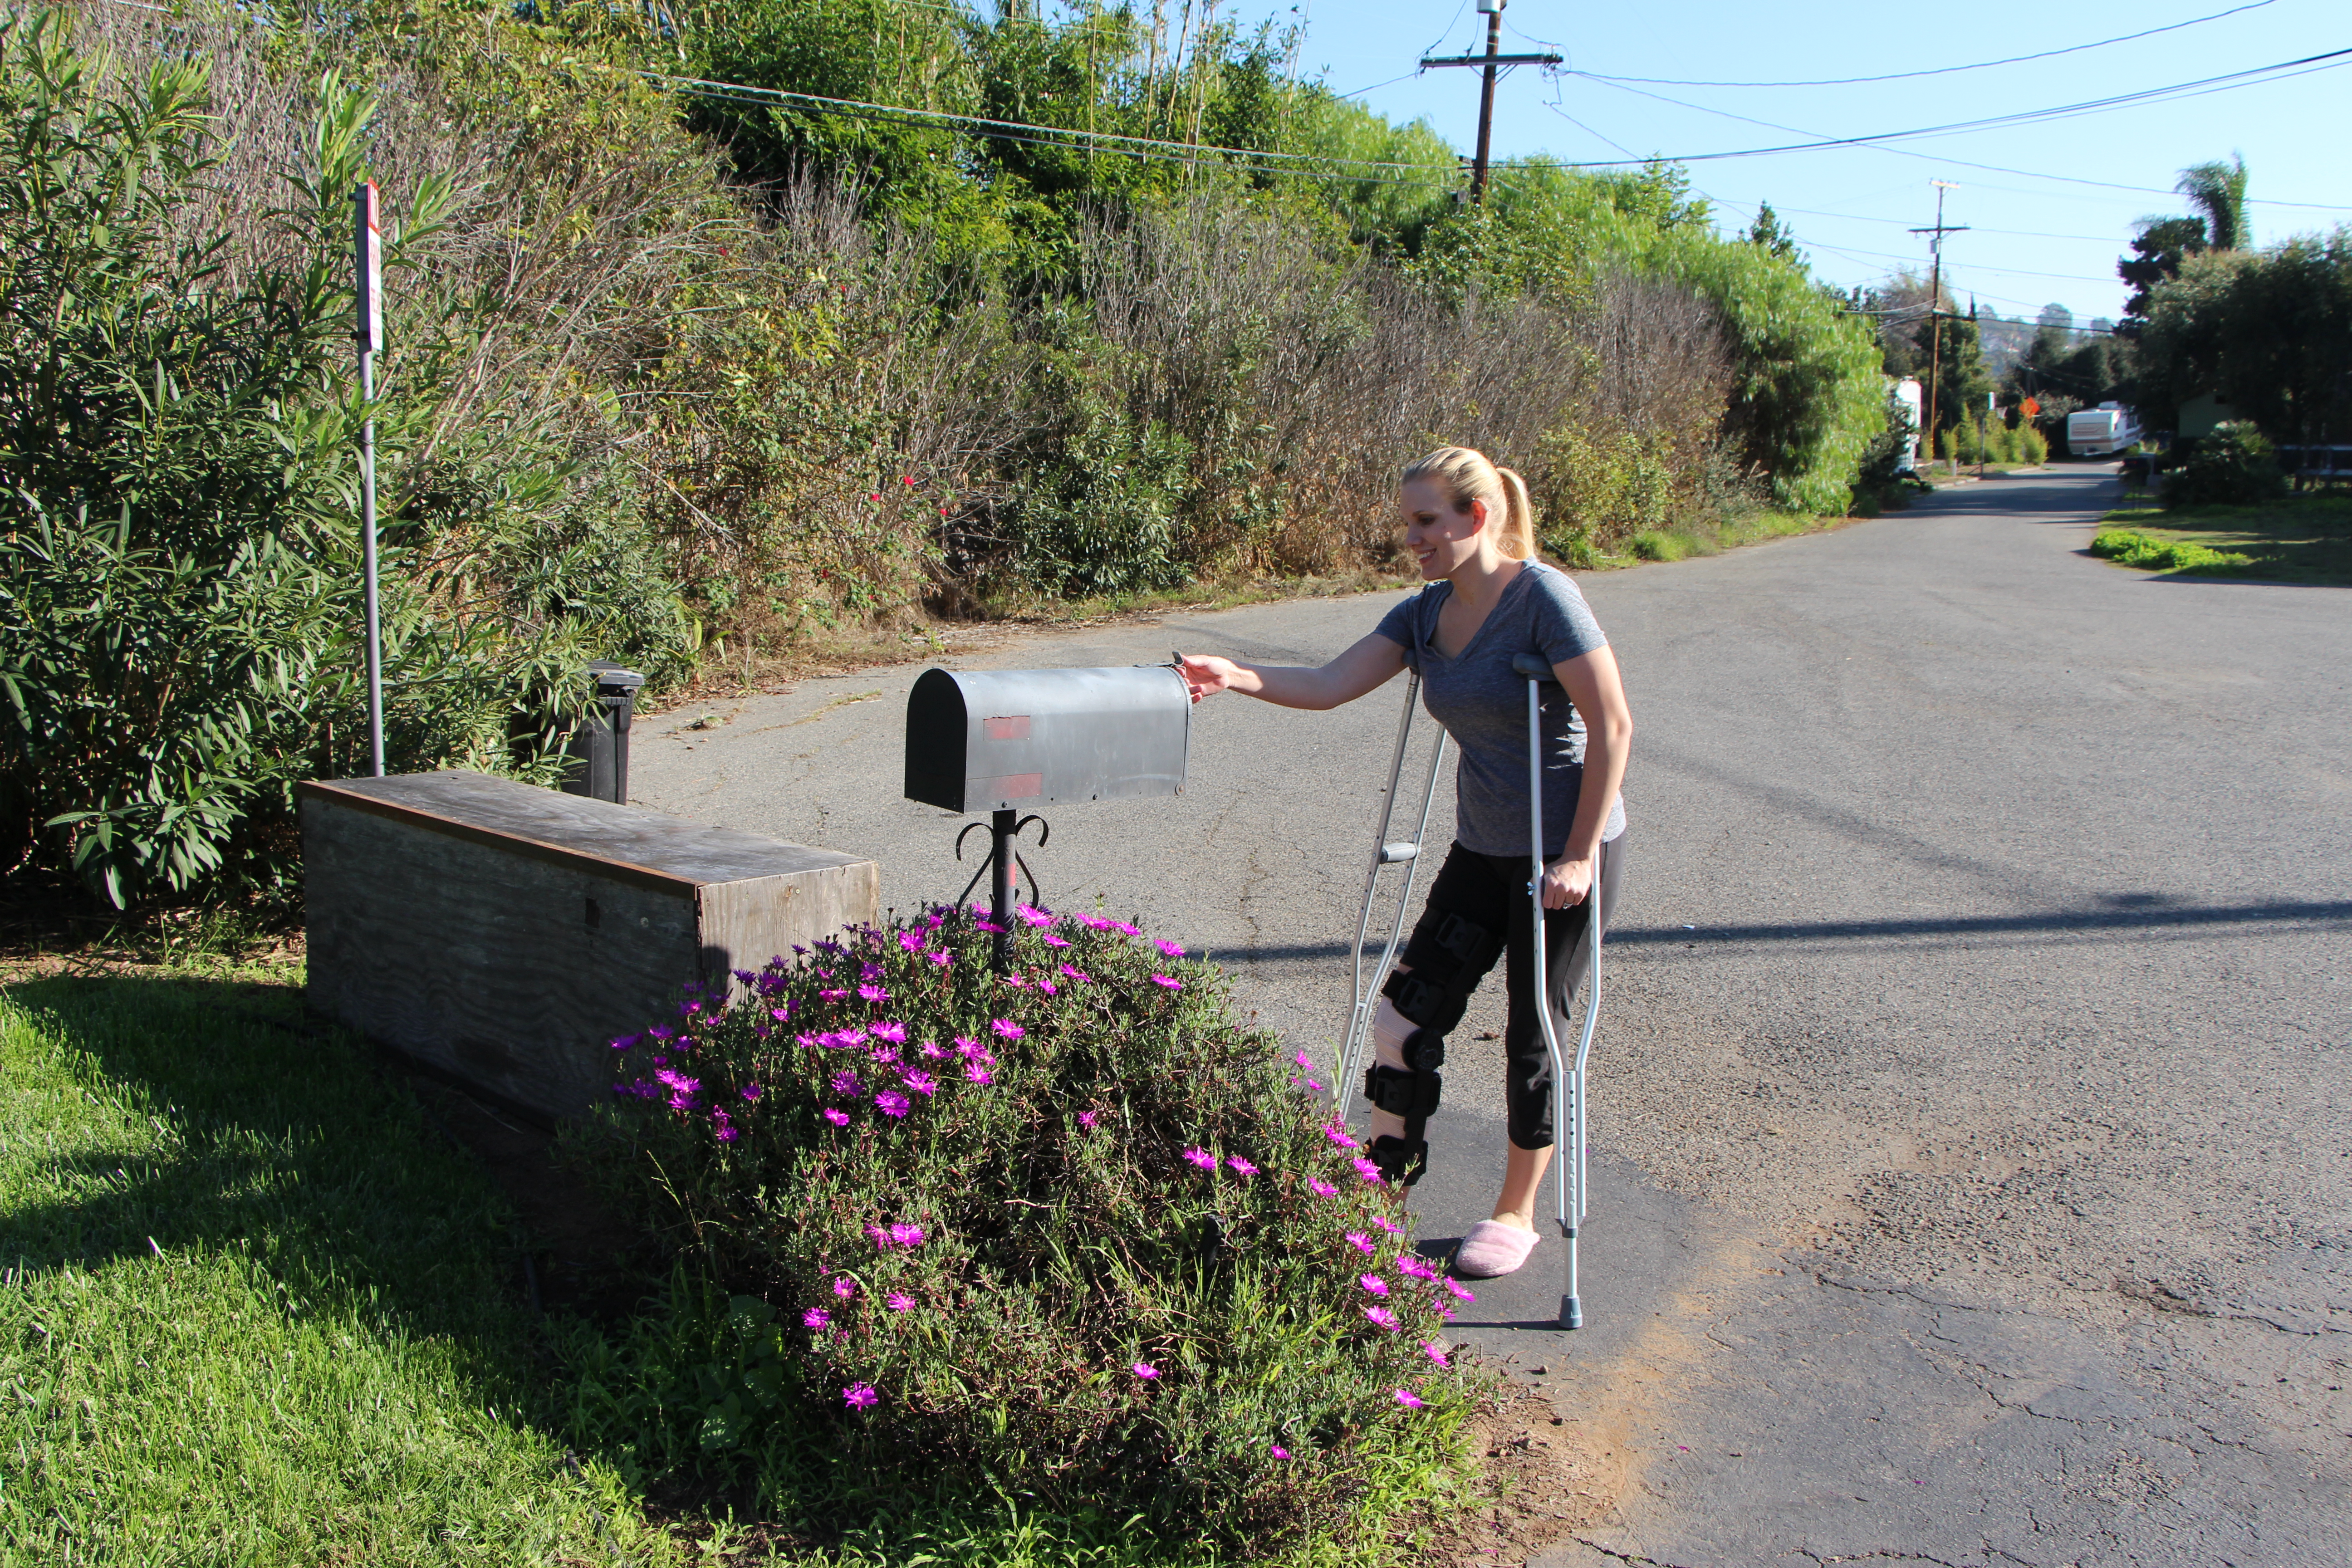 Simple tasks are no longer simple for LA Fitness member Chrissy